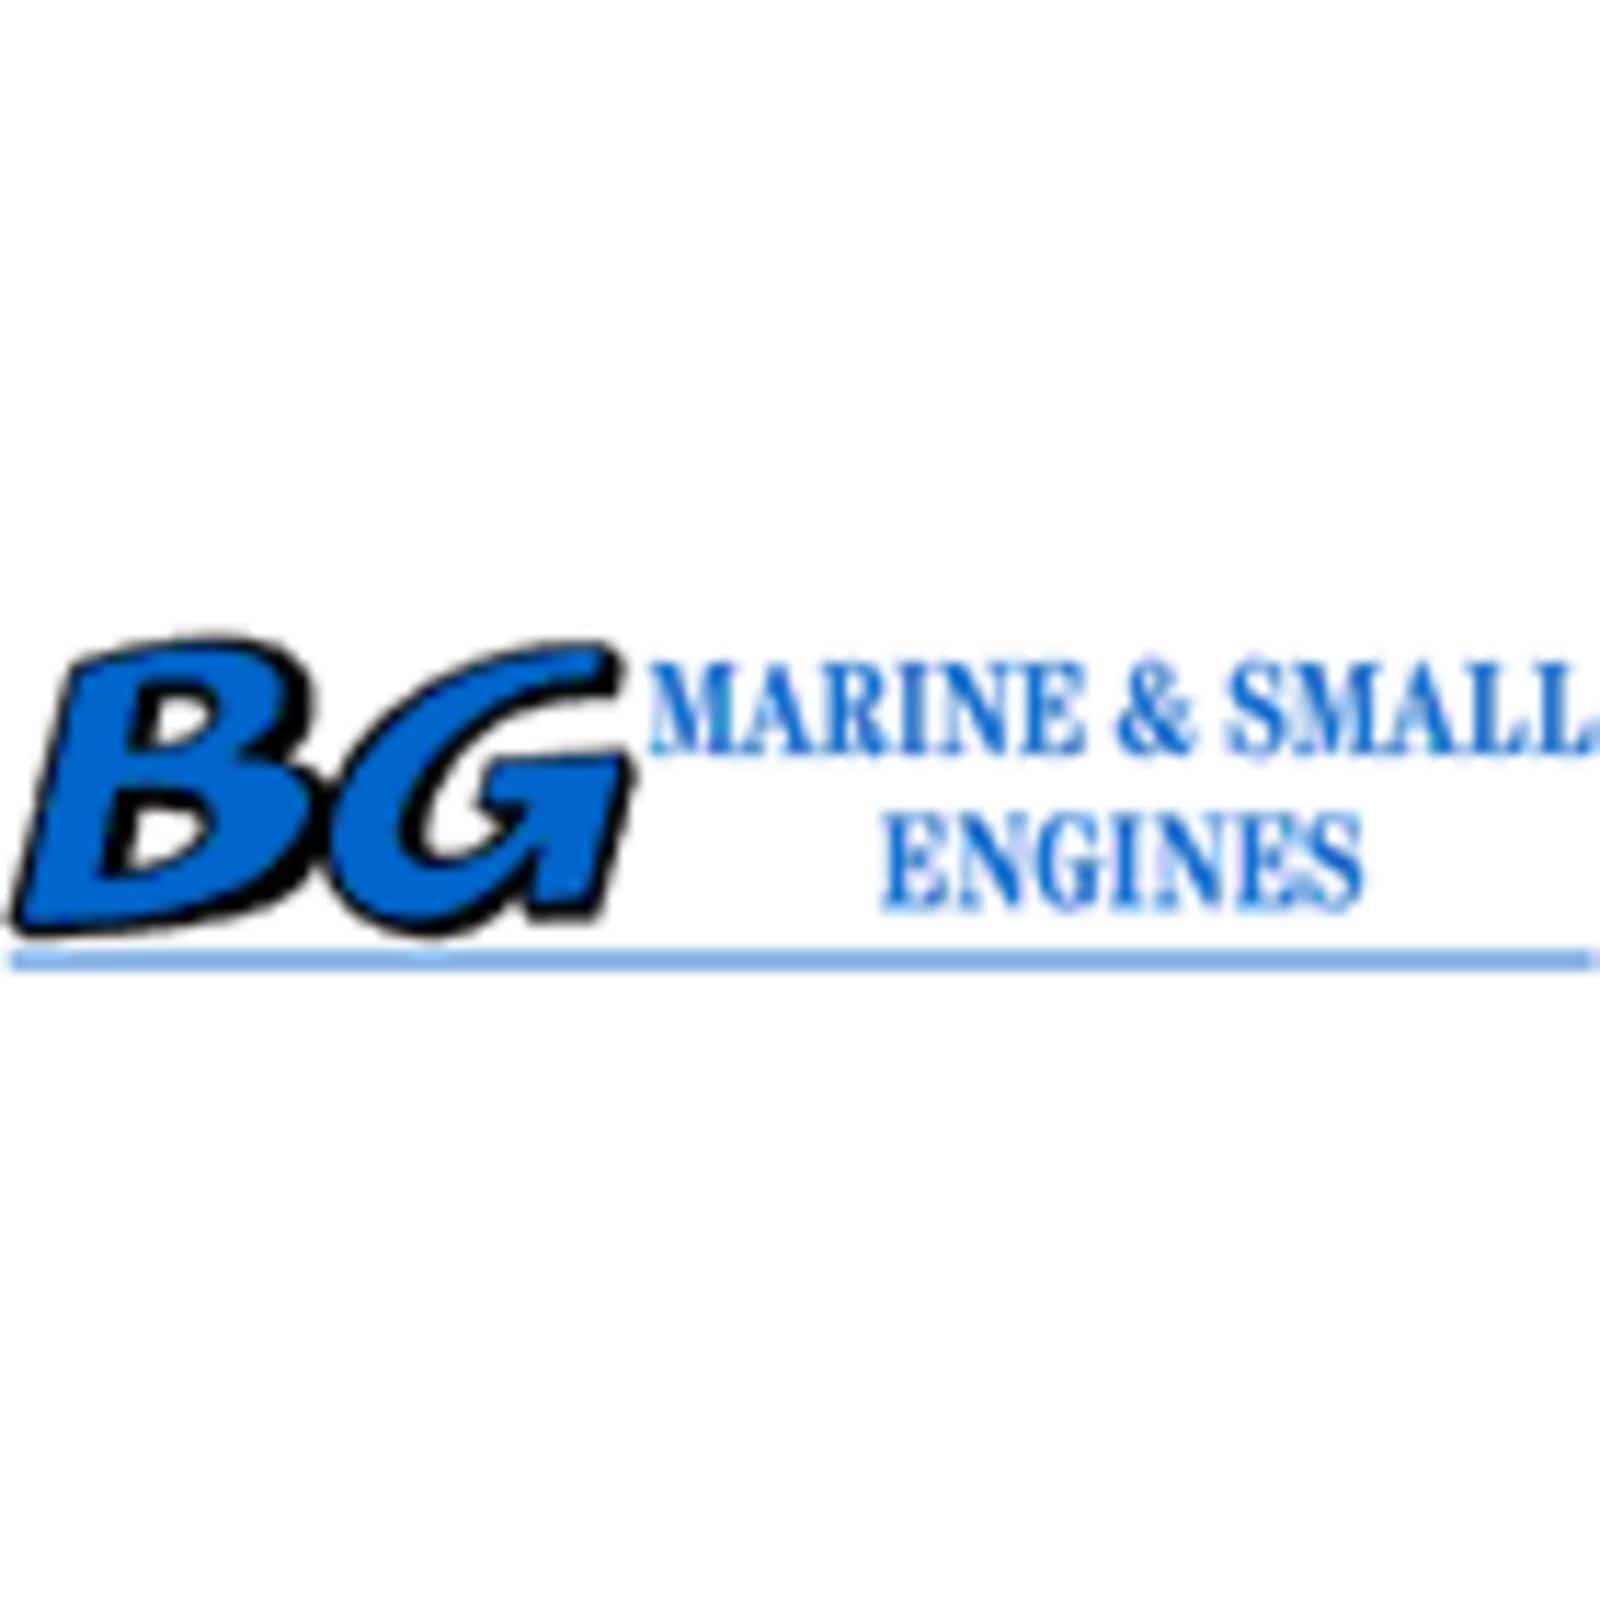 BG Marine & Small Engines Inc.